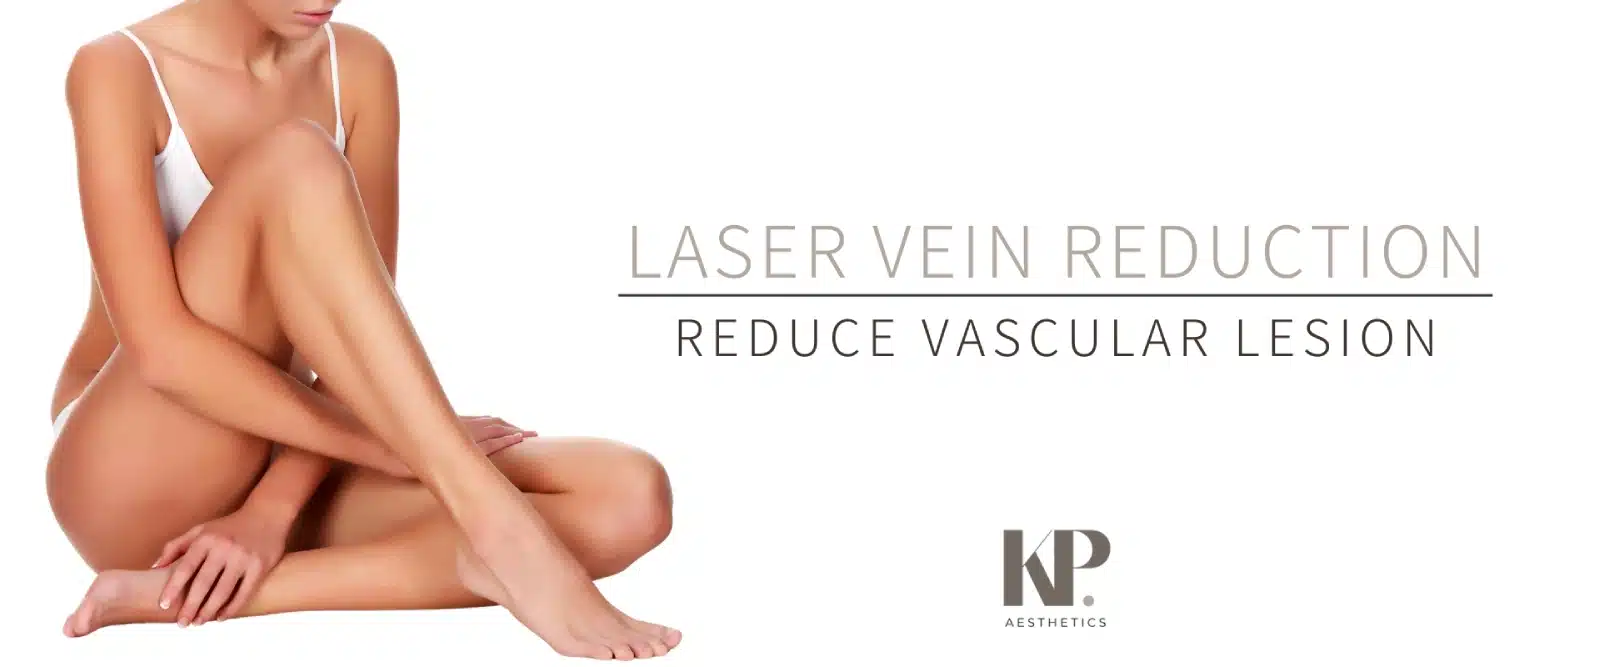 Laser Vein Reduction - Reduce Vascular Lesion - KP Aesthetics